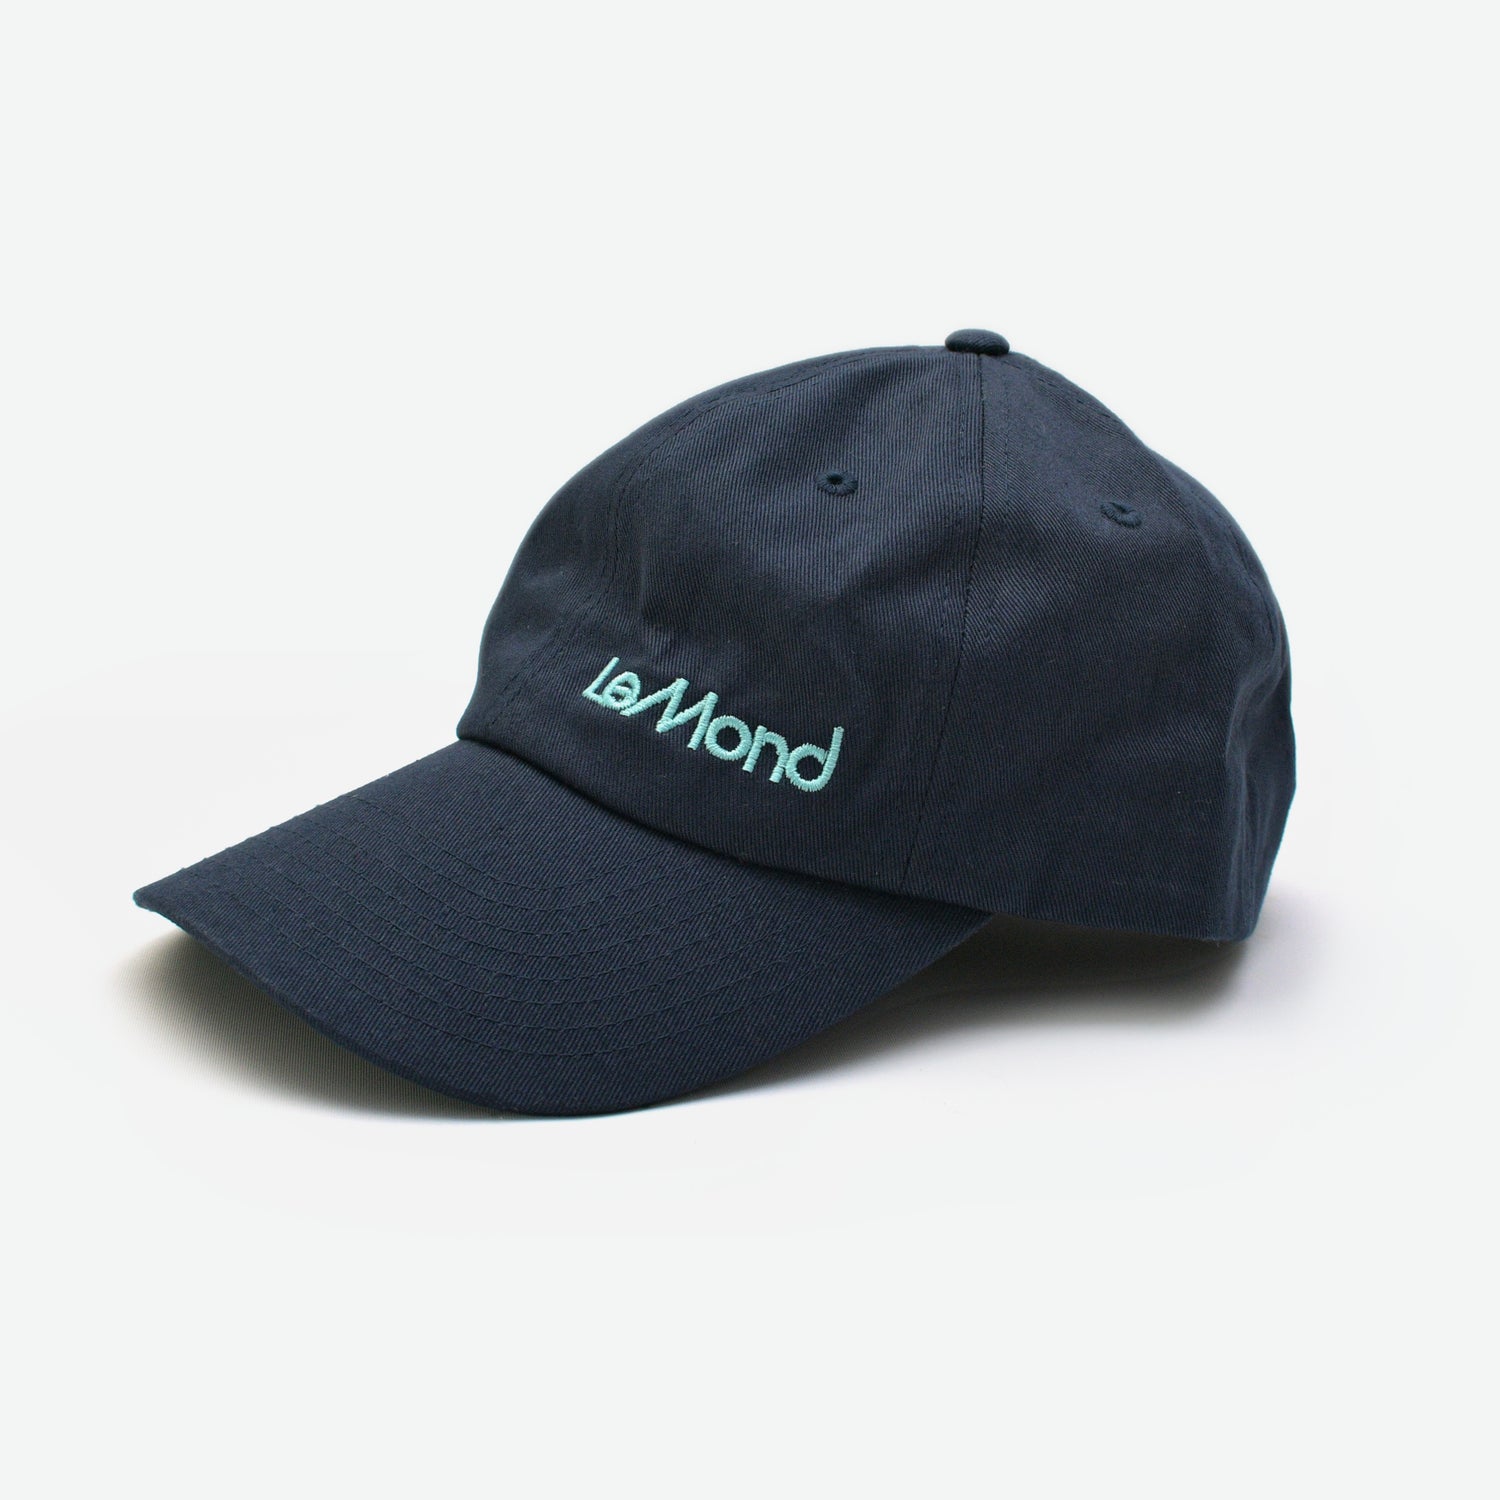 LeMond Hat